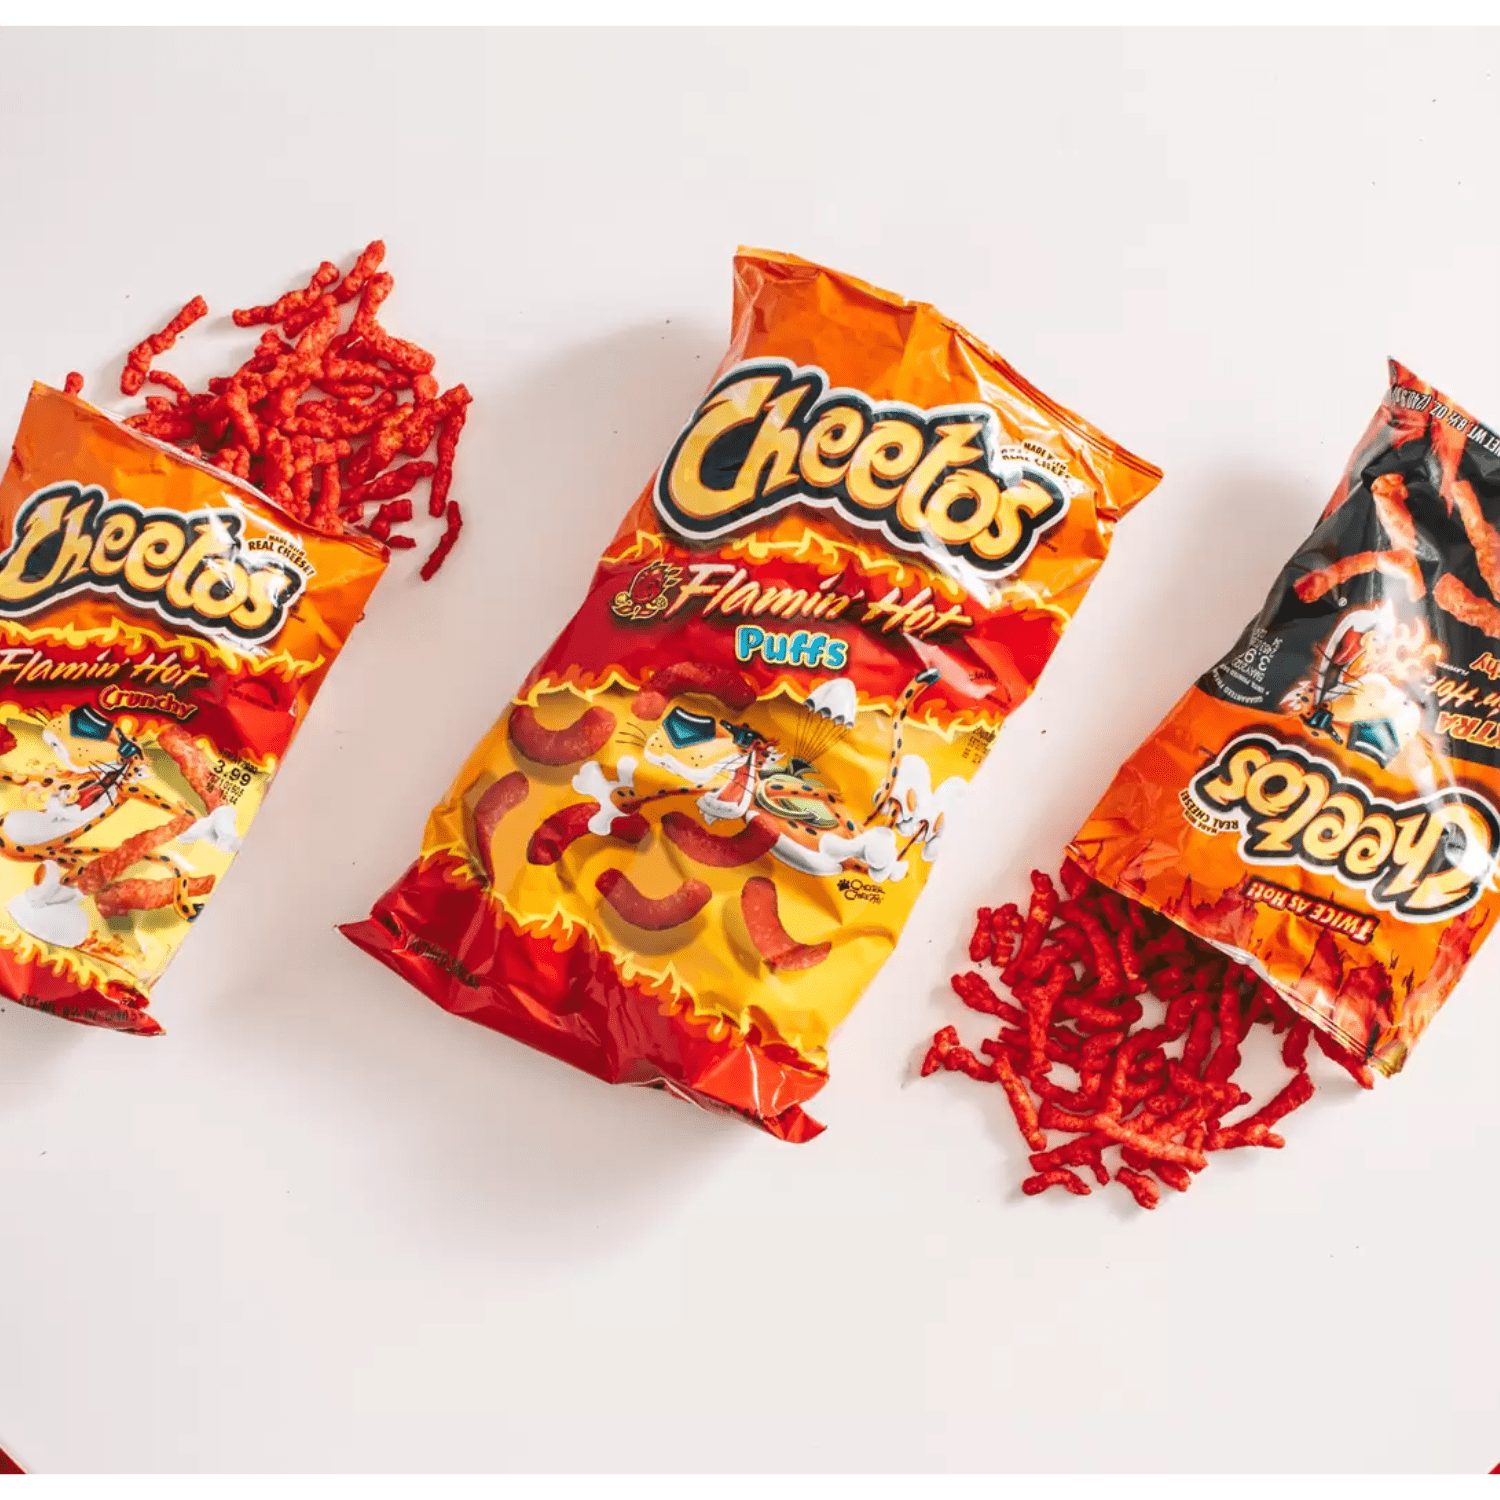 Doritos Xxtra Flamin' Hot Nacho chips and Cheetos Flamin' Hot Spicy Pepper  Puffs, 2021-05-06